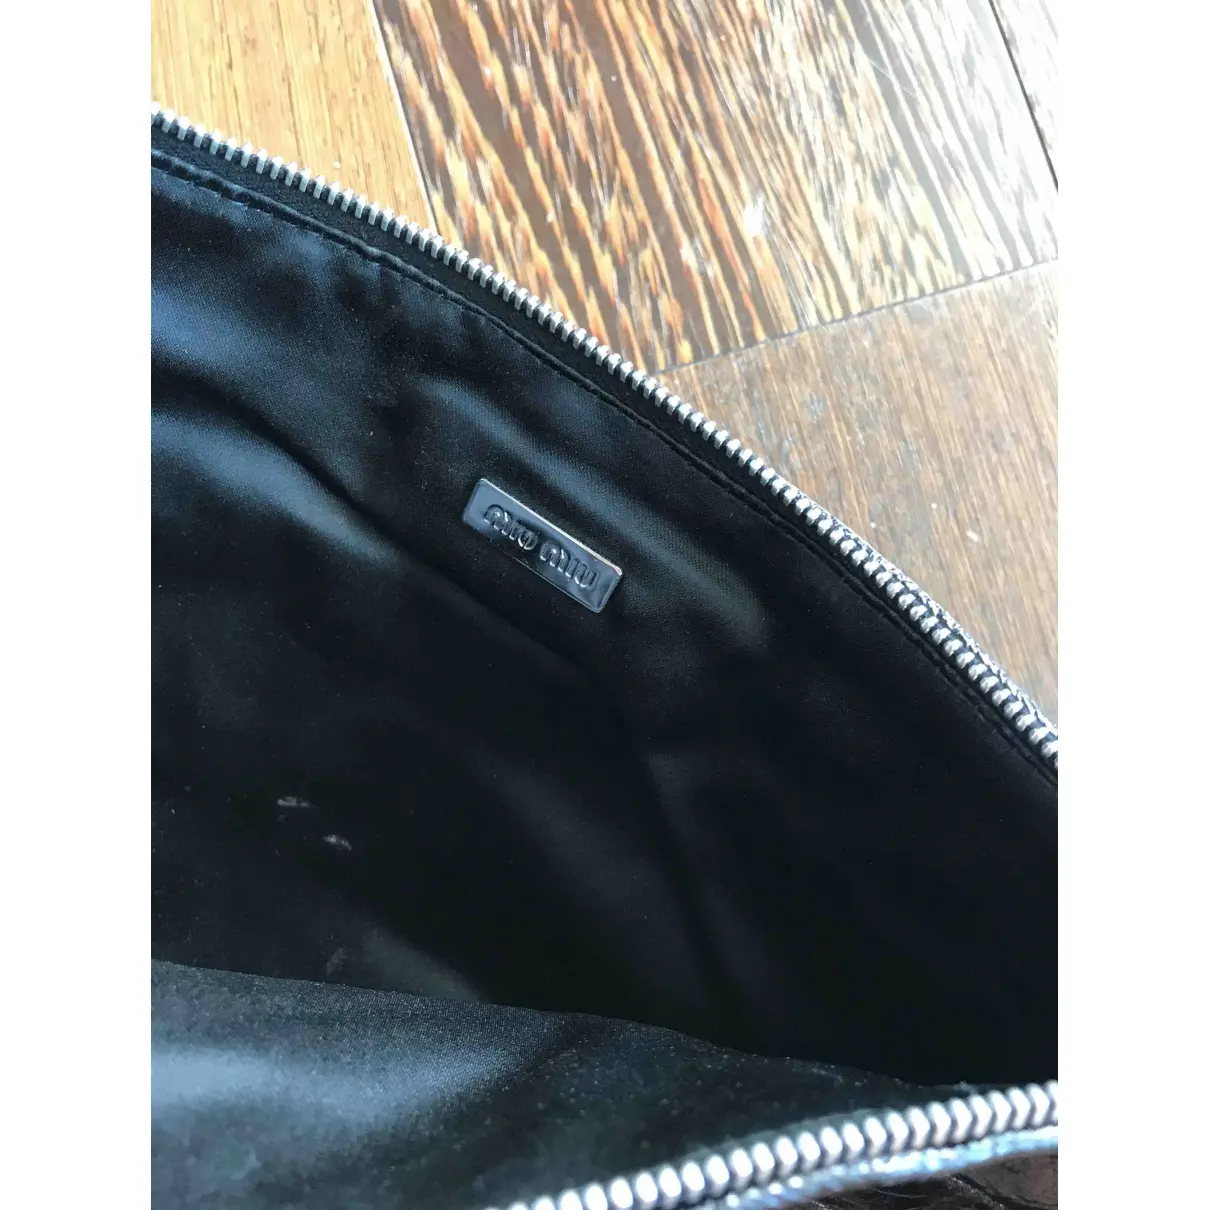 Buy Miu Miu Madras patent leather clutch bag online